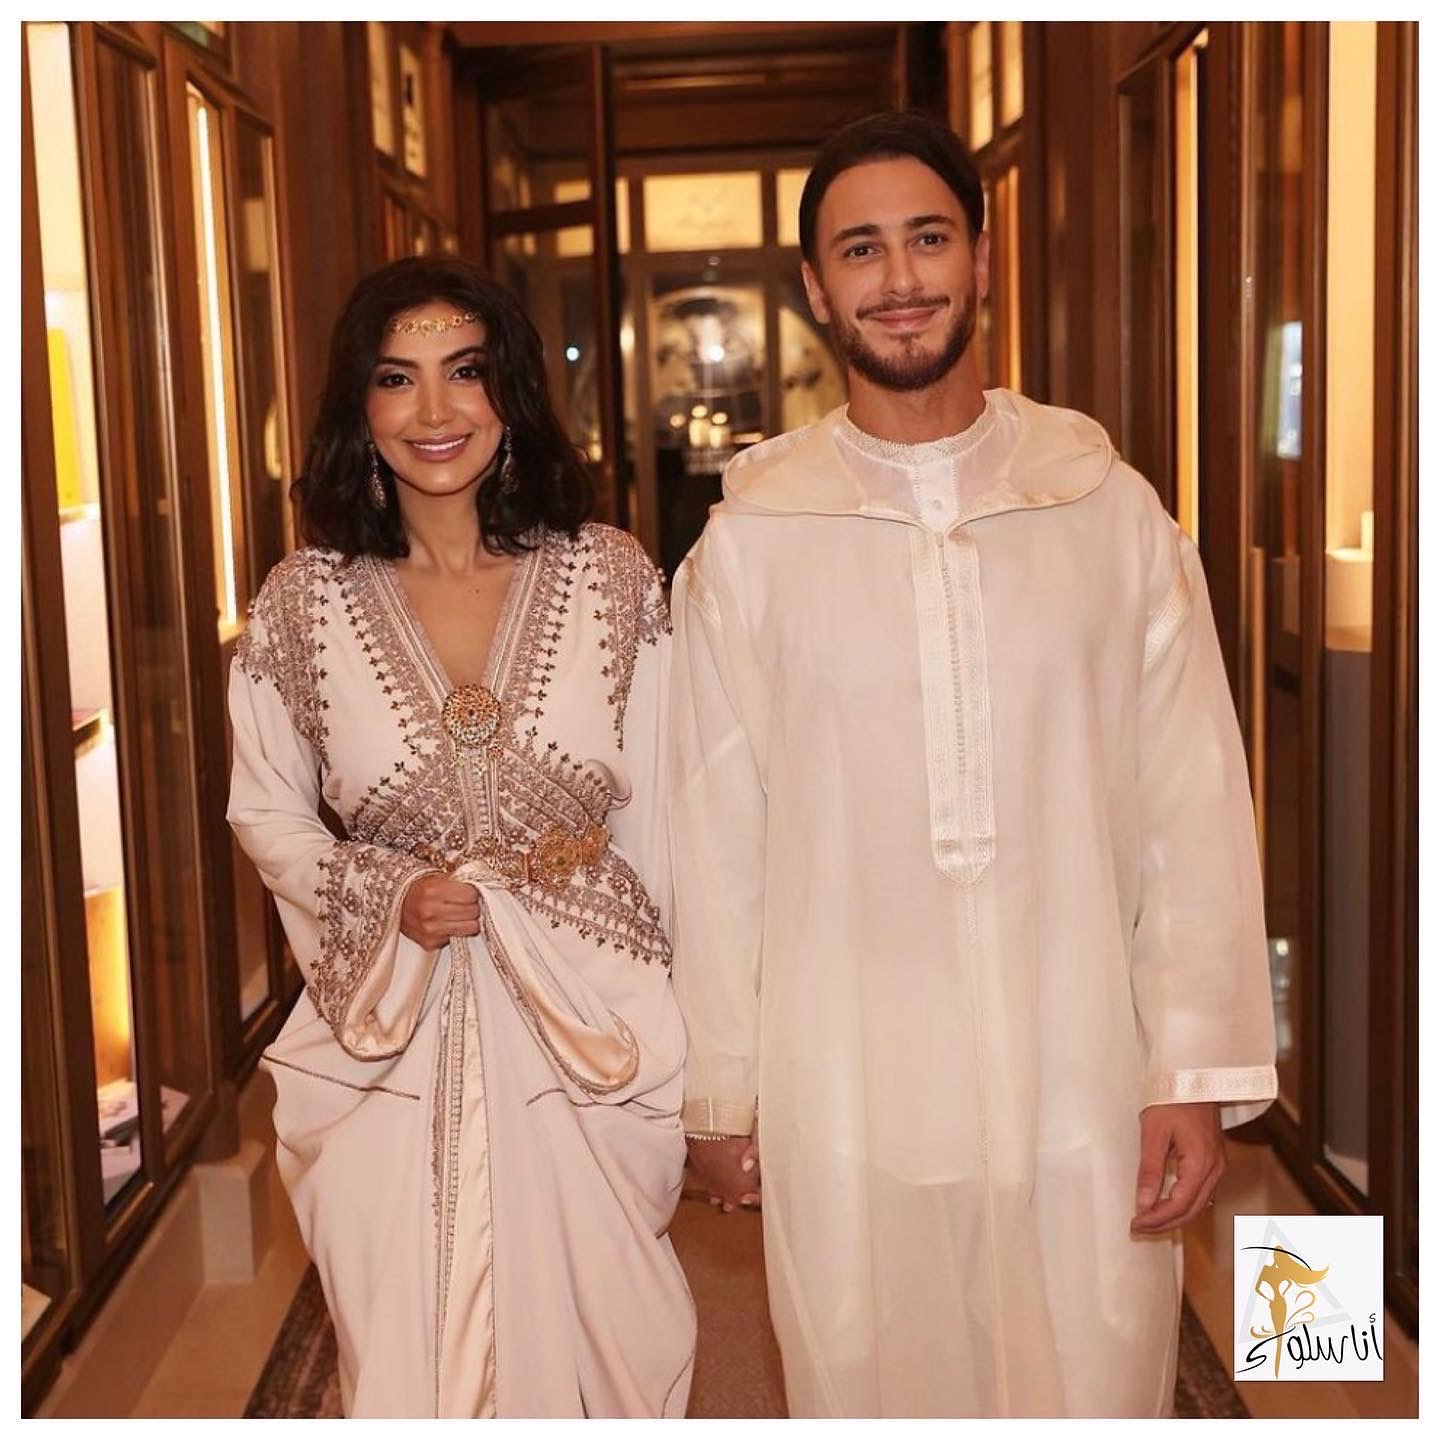 The wedding of the artist Saad Lamjarred and Ghaith Al Alaki